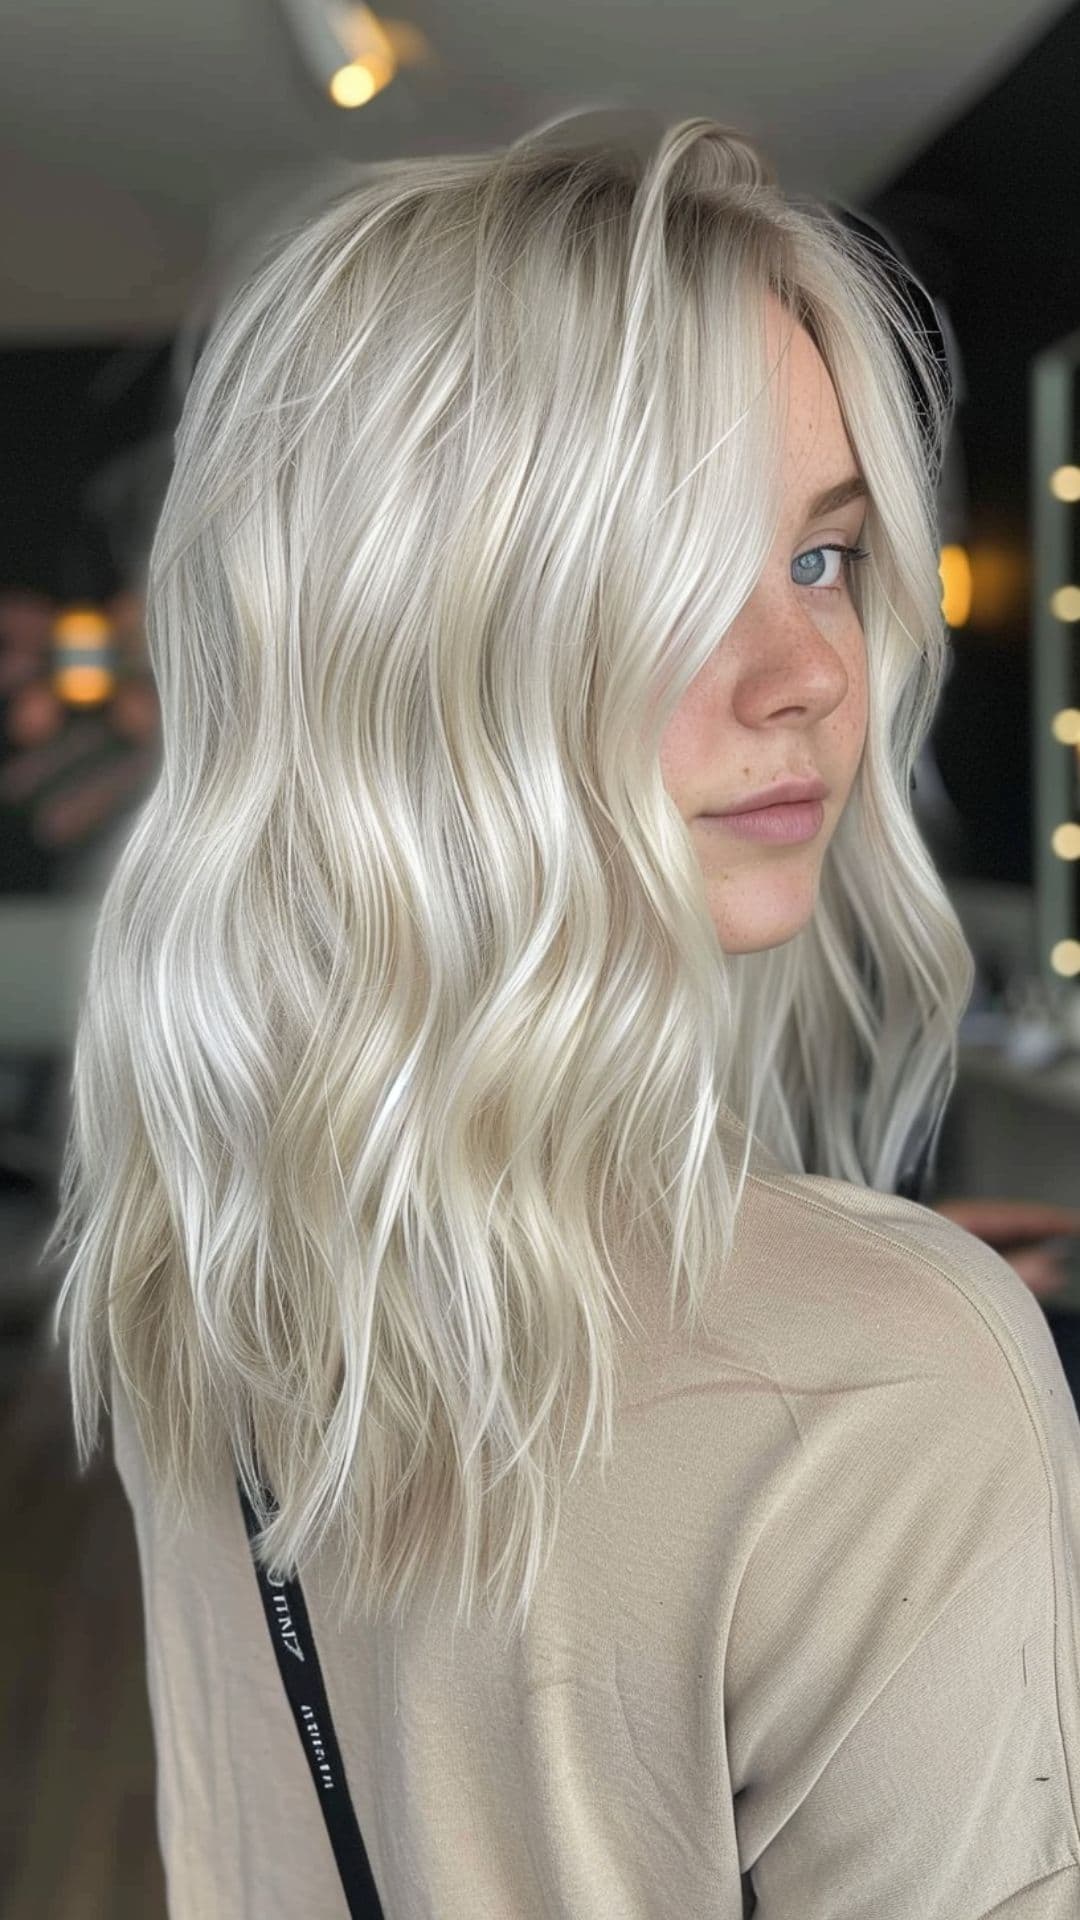 A woman modelling a platinum blonde hair.